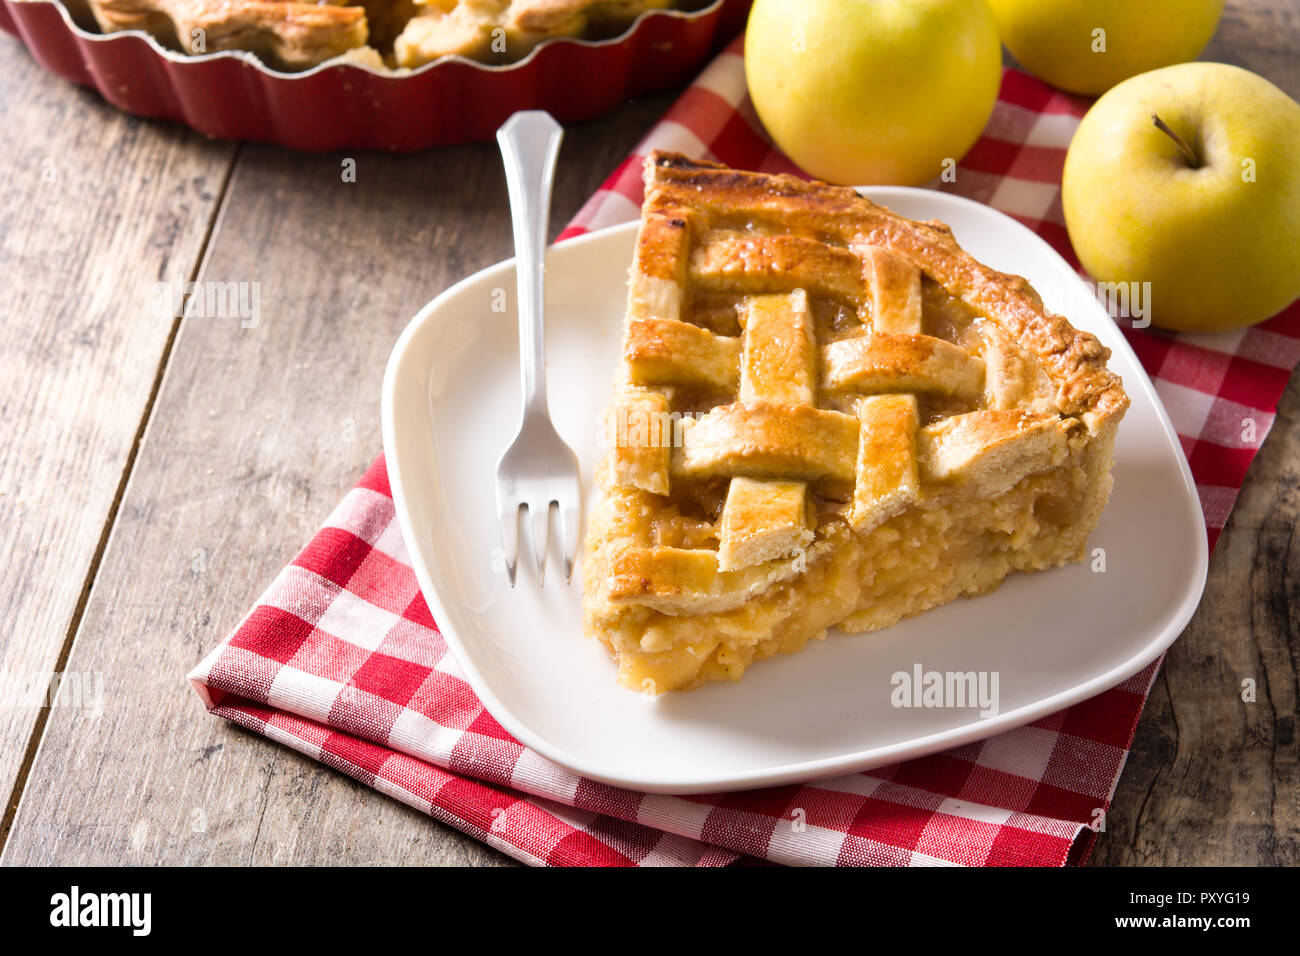 Homemade apple pie slice on wooden table Stock Photo